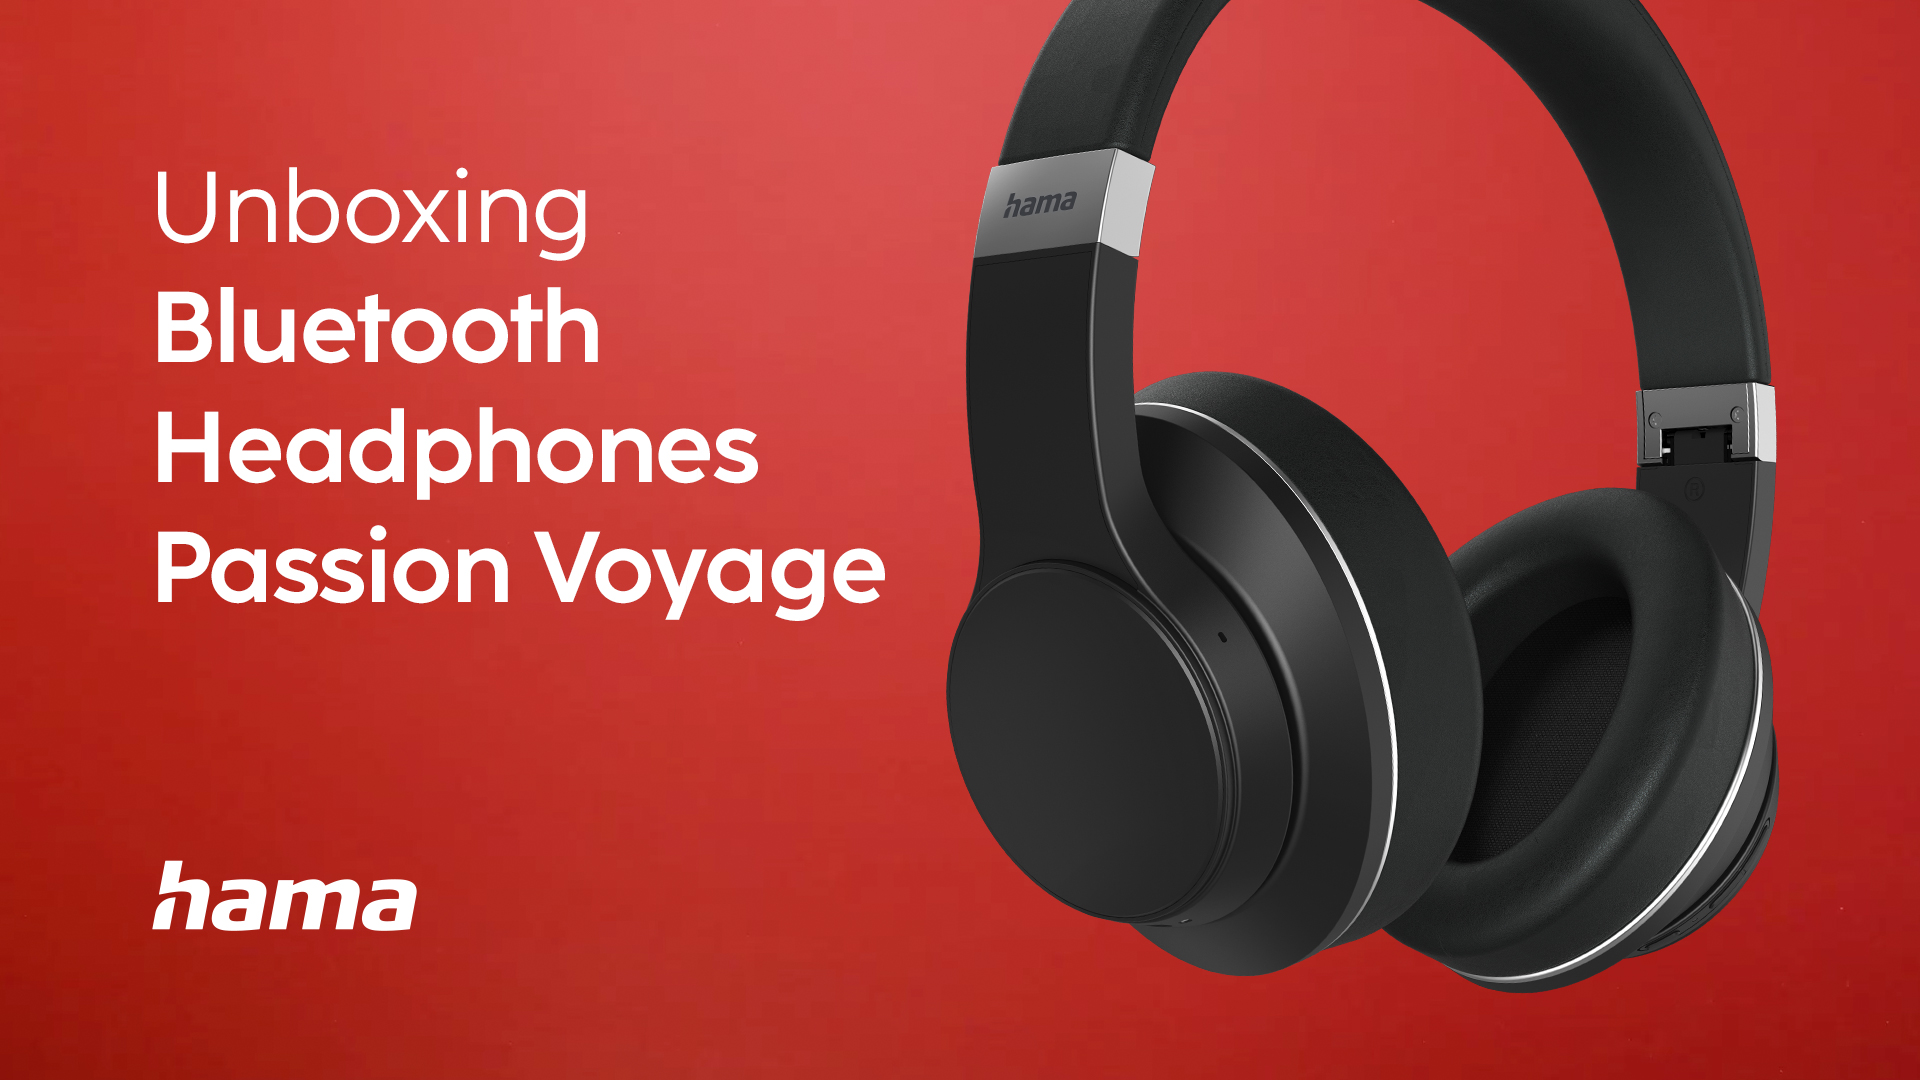 Hama Bluetooth Headphones "Passion Voyage" | Unboxing